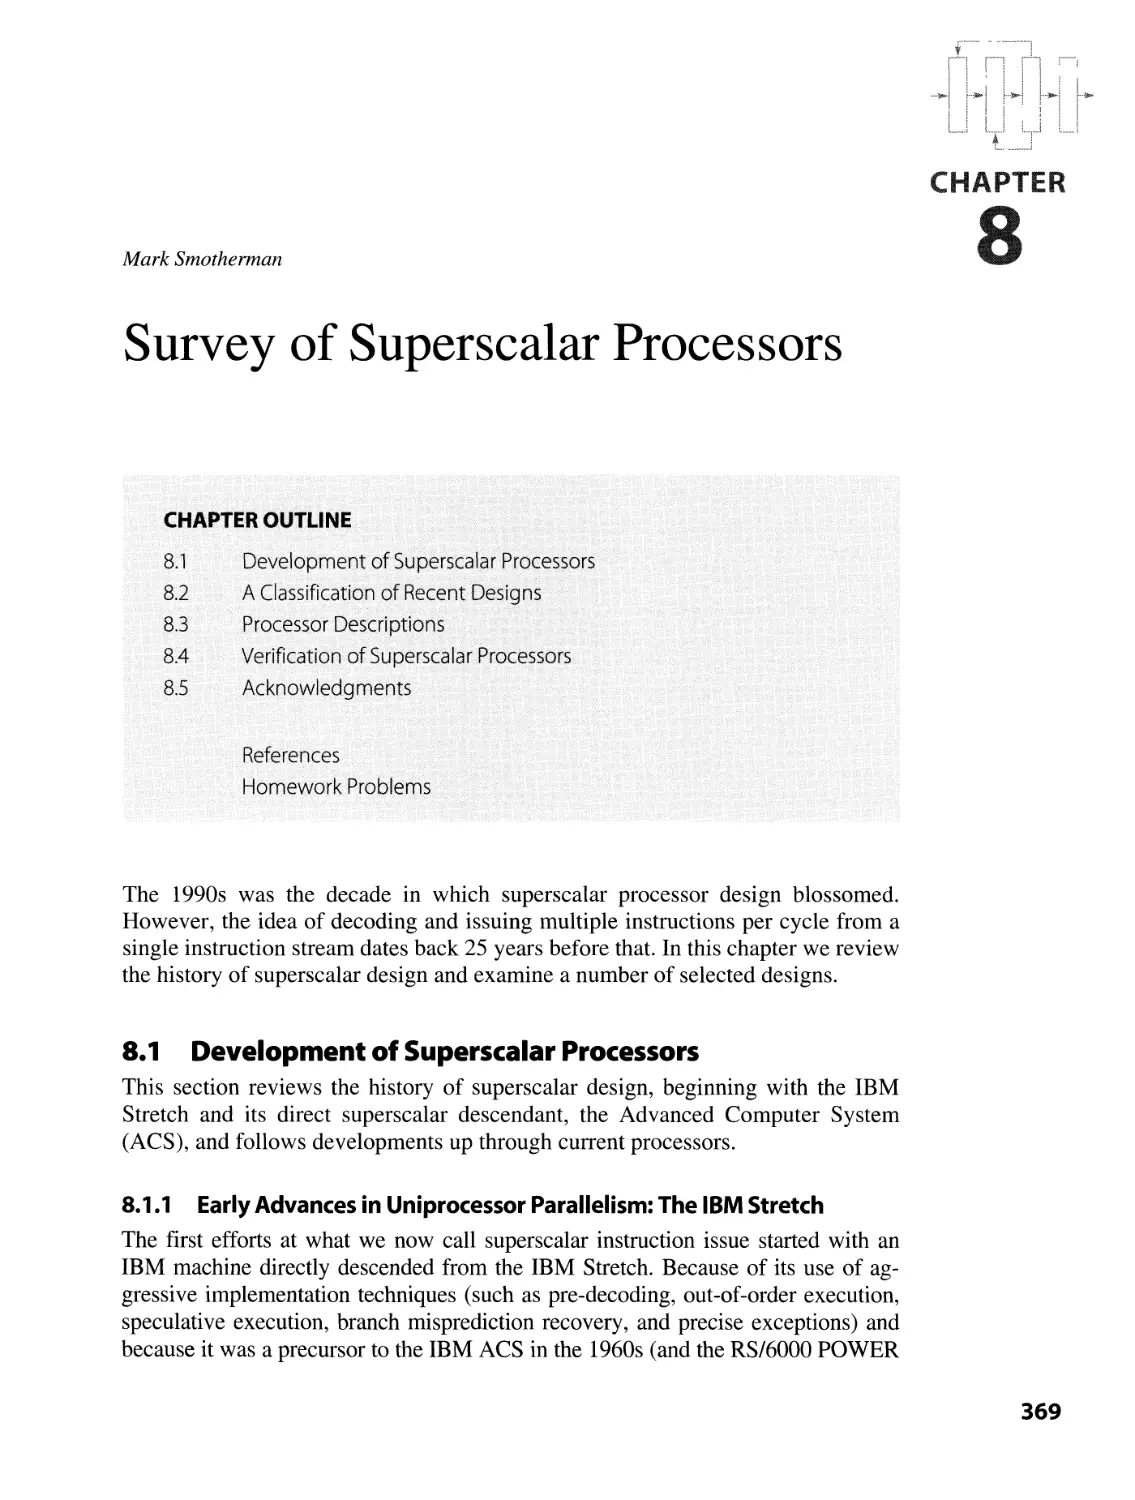 8. Survey of Superscalar Processors
8.1 Development of Superscalar Processors
8.1.1 Early Advances in Uniprocessor Parallelism